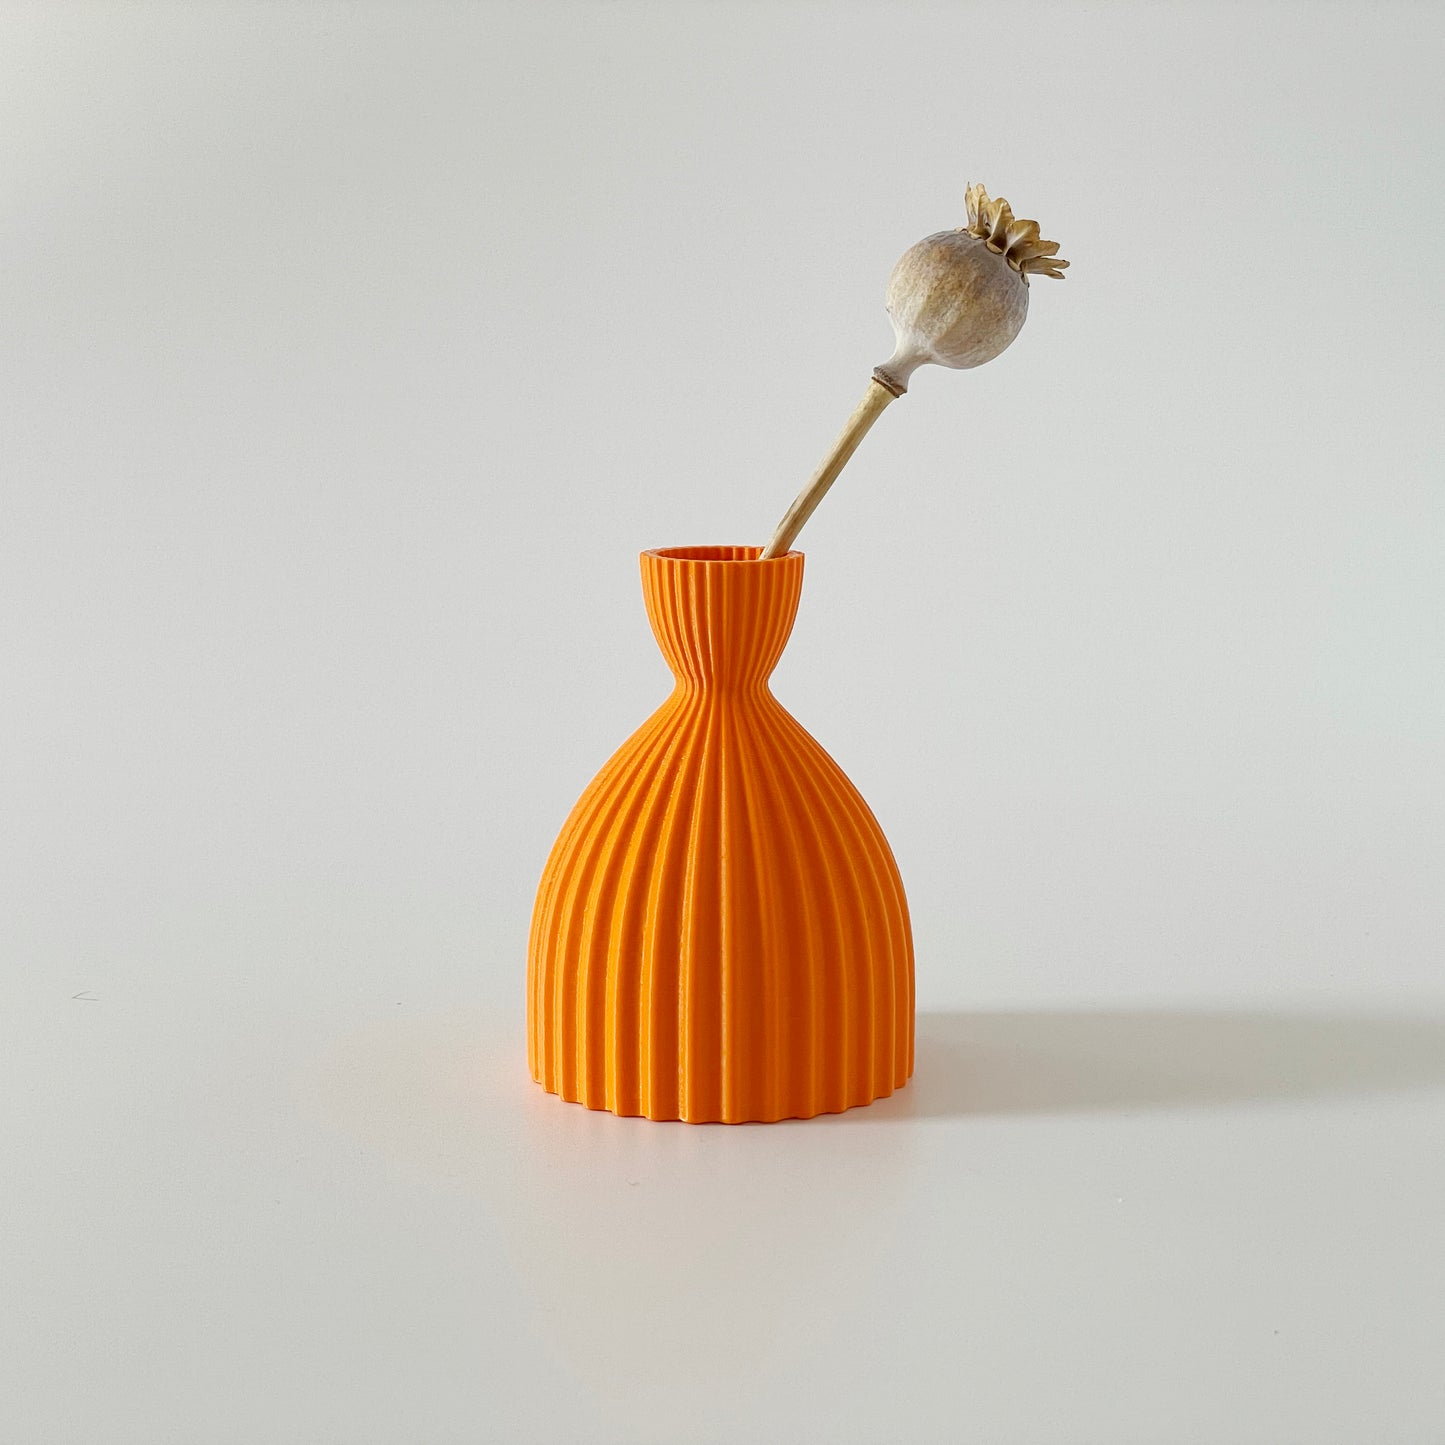 Keeley Traae Tangerine Vase